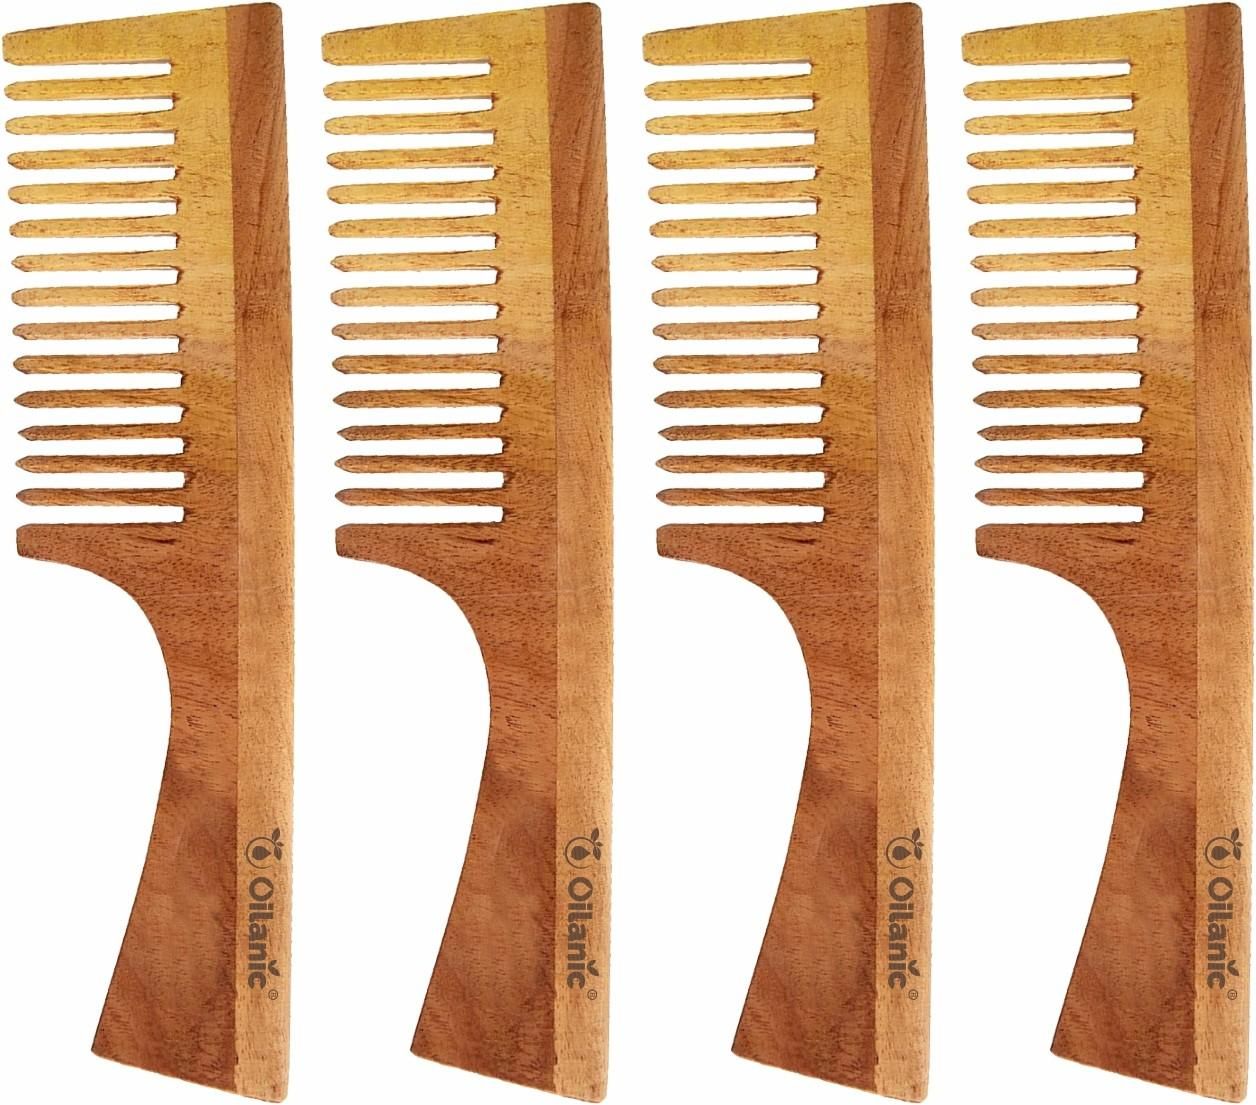 Oilanic Handmade Neem Wooden Dressing Handle Comb(7.5 inches)- For Antidandruff & Hair growth Men & Women pack of 4 Pcs